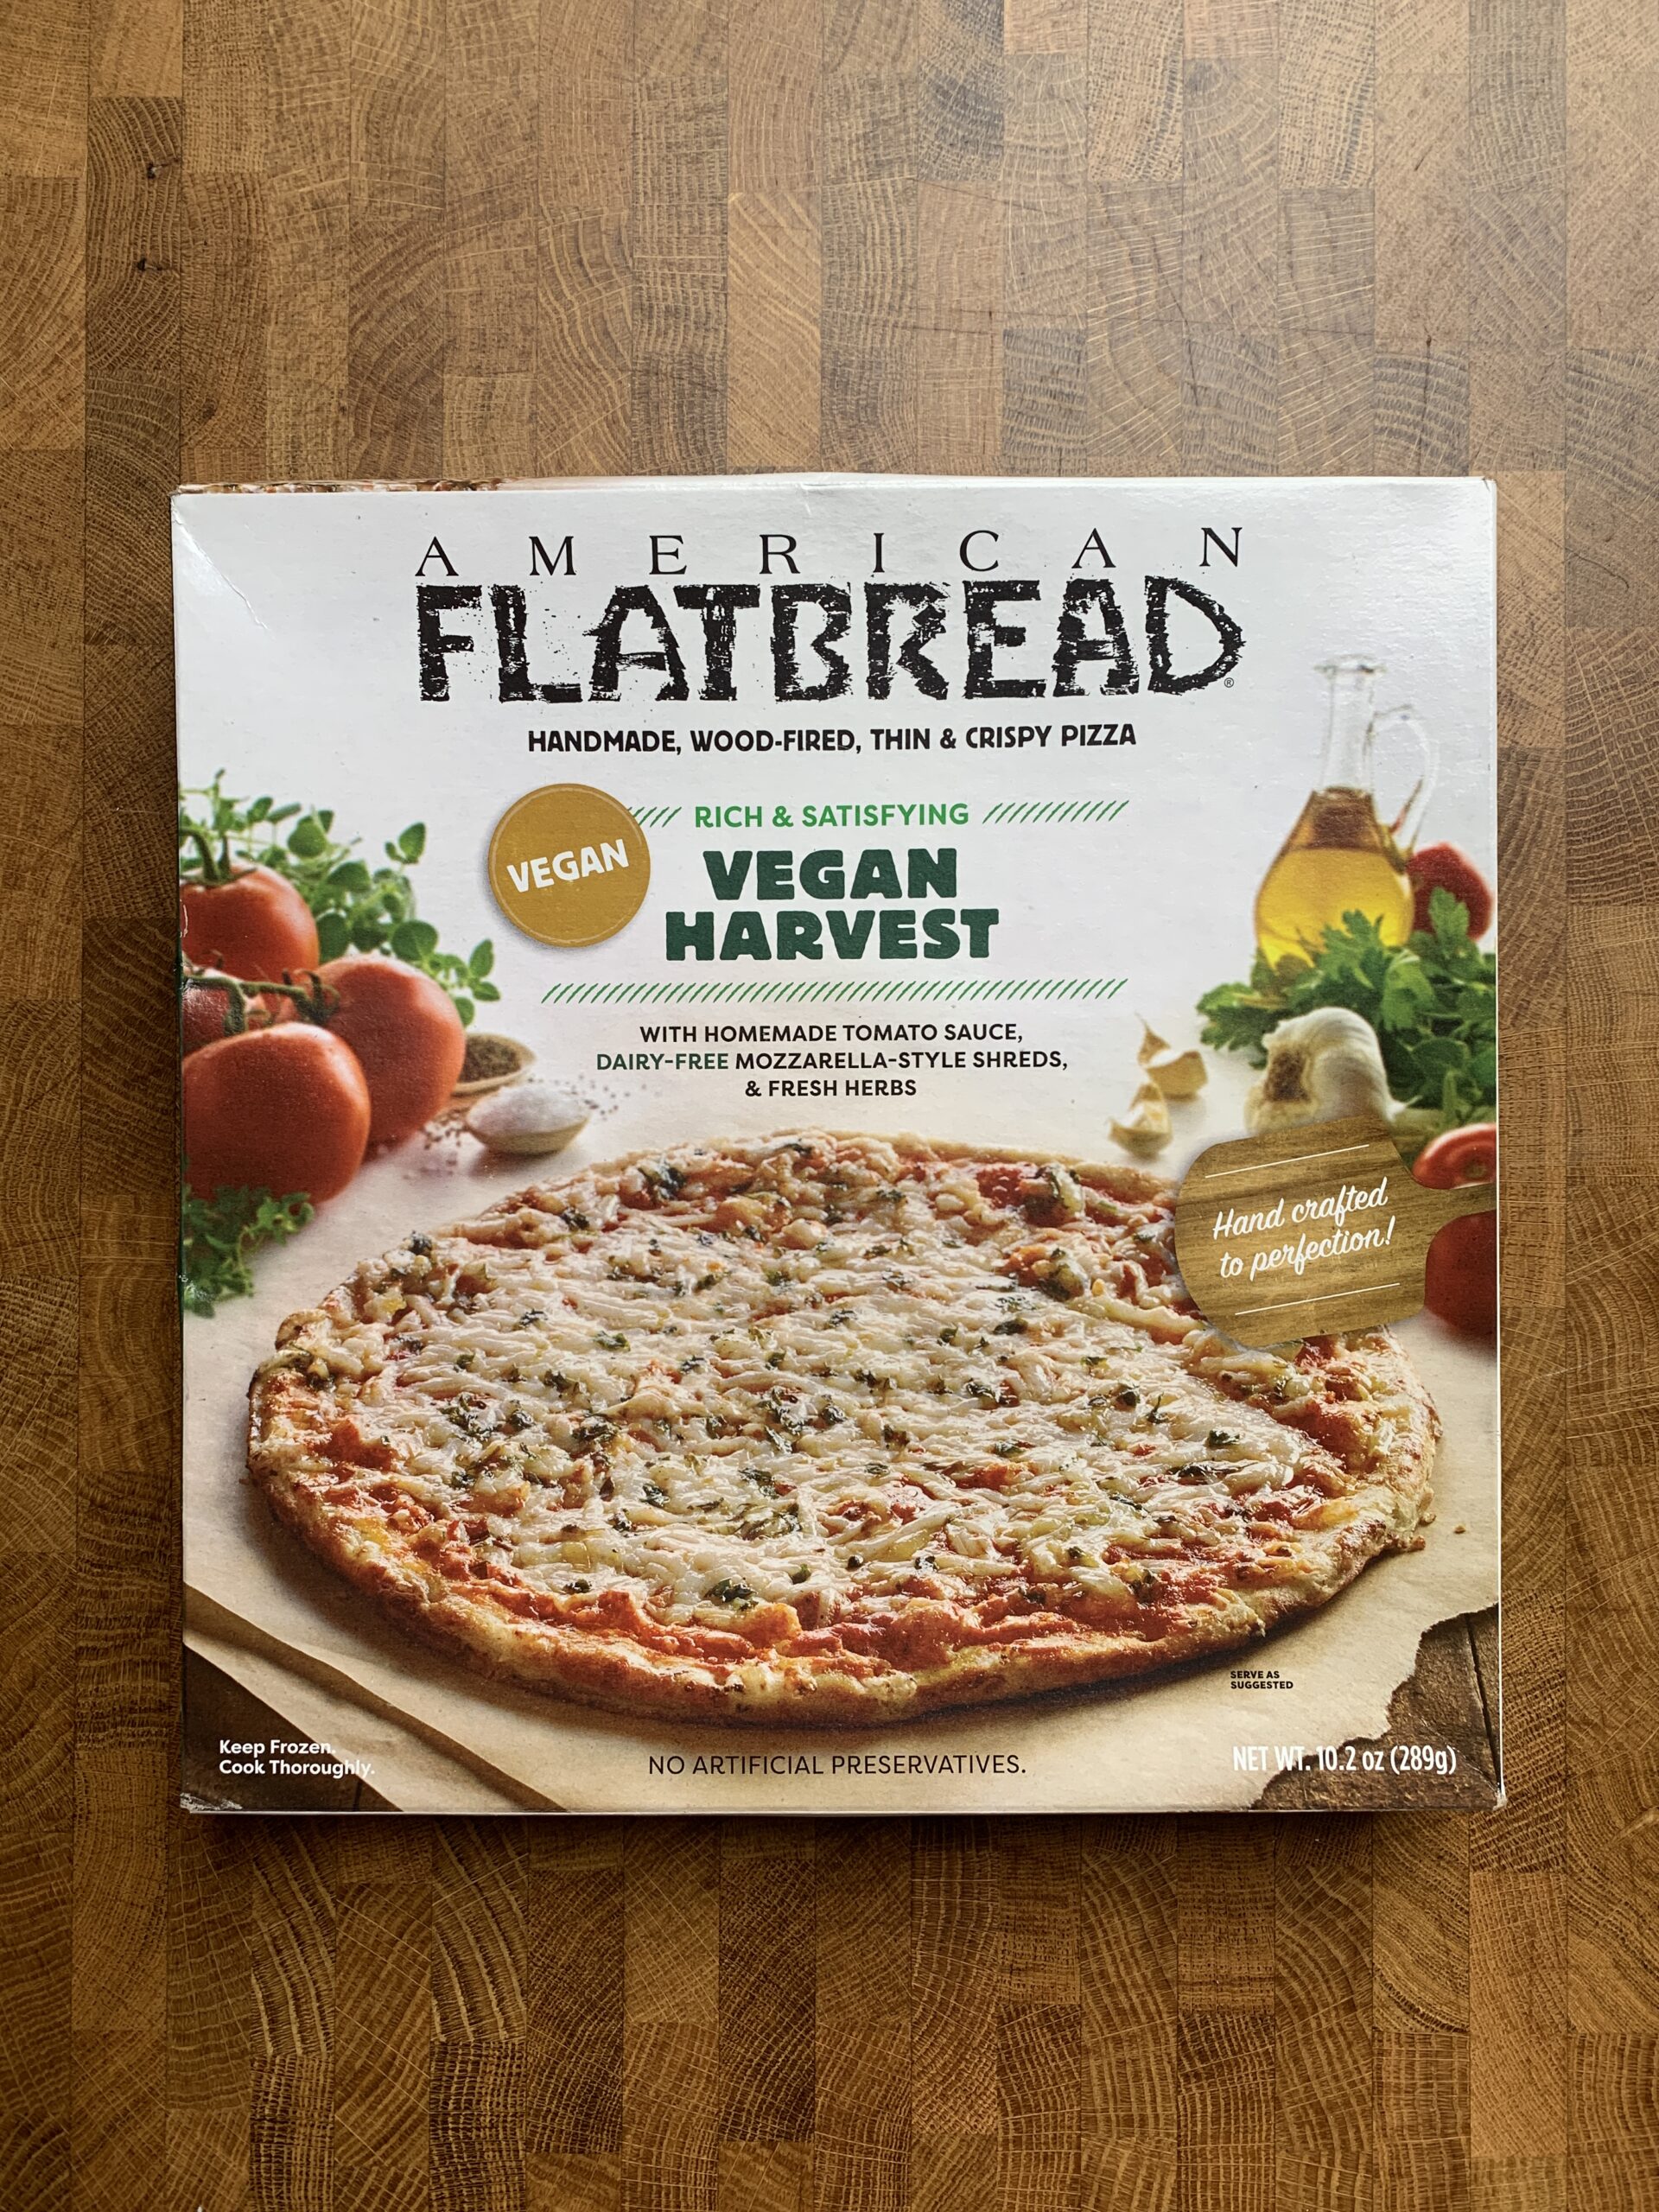 American flatbread vegan harvest frozen pizza box.